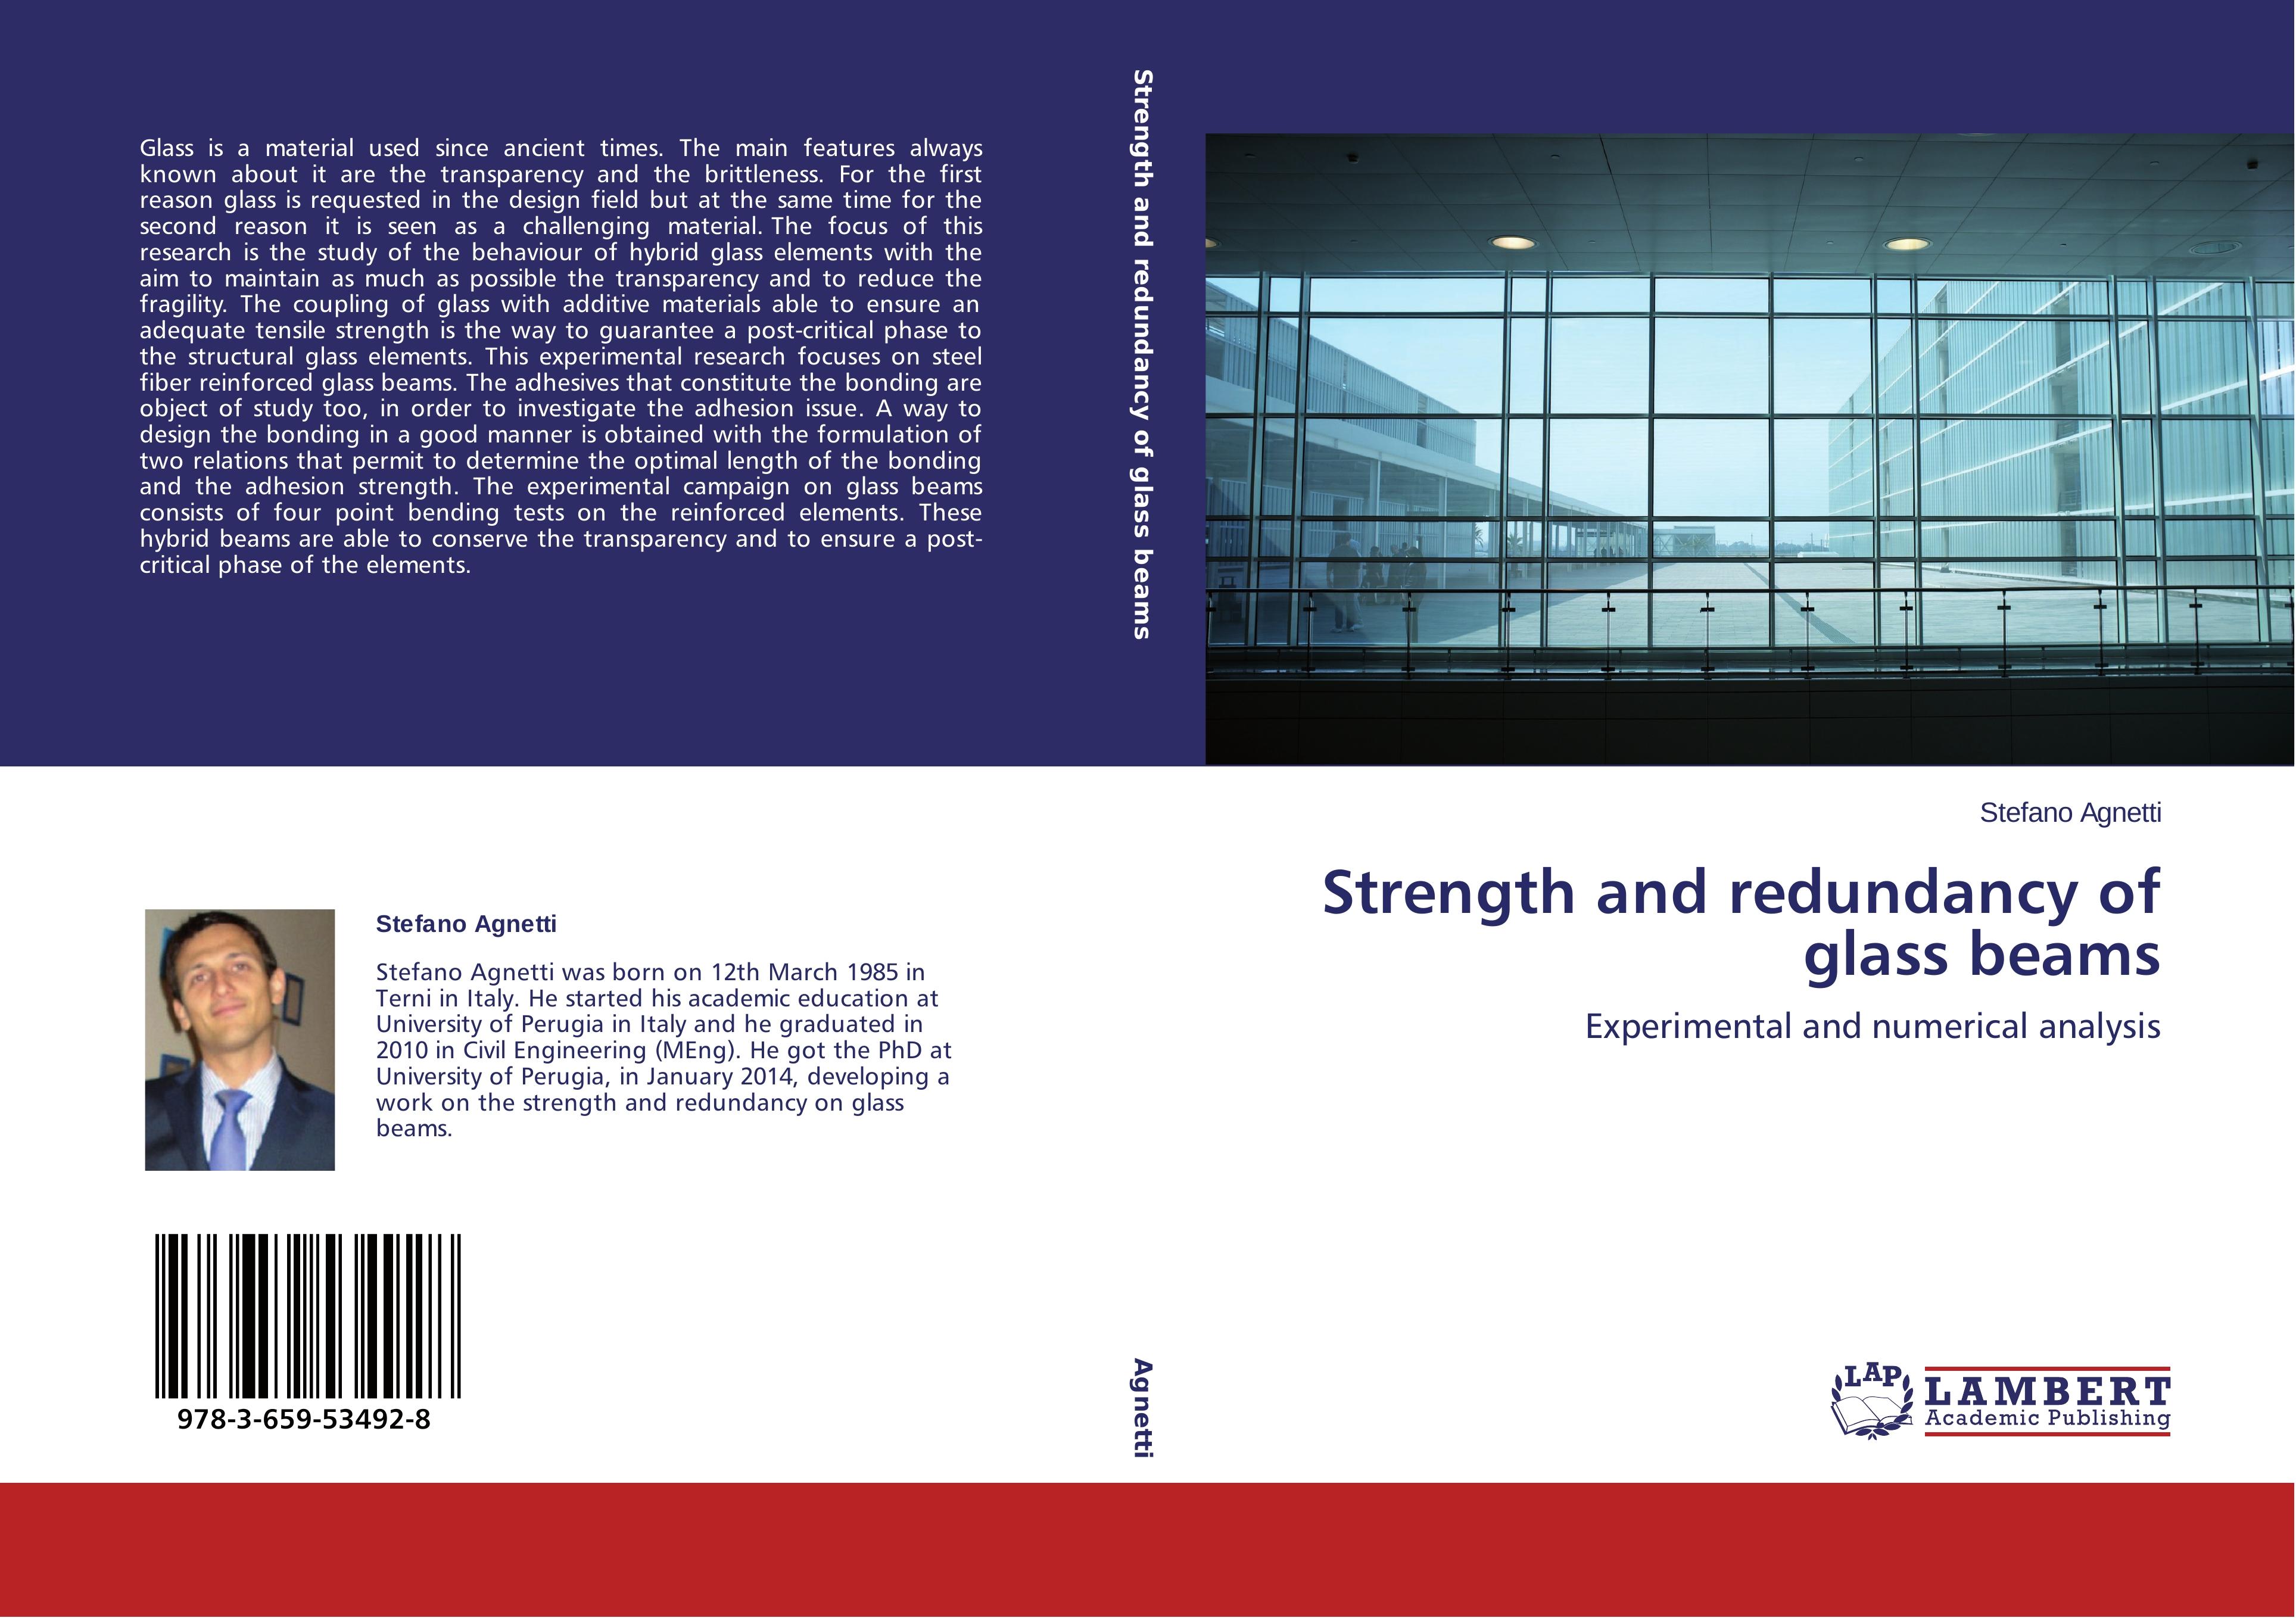 Strength and redundancy of glass beams - Stefano Agnetti